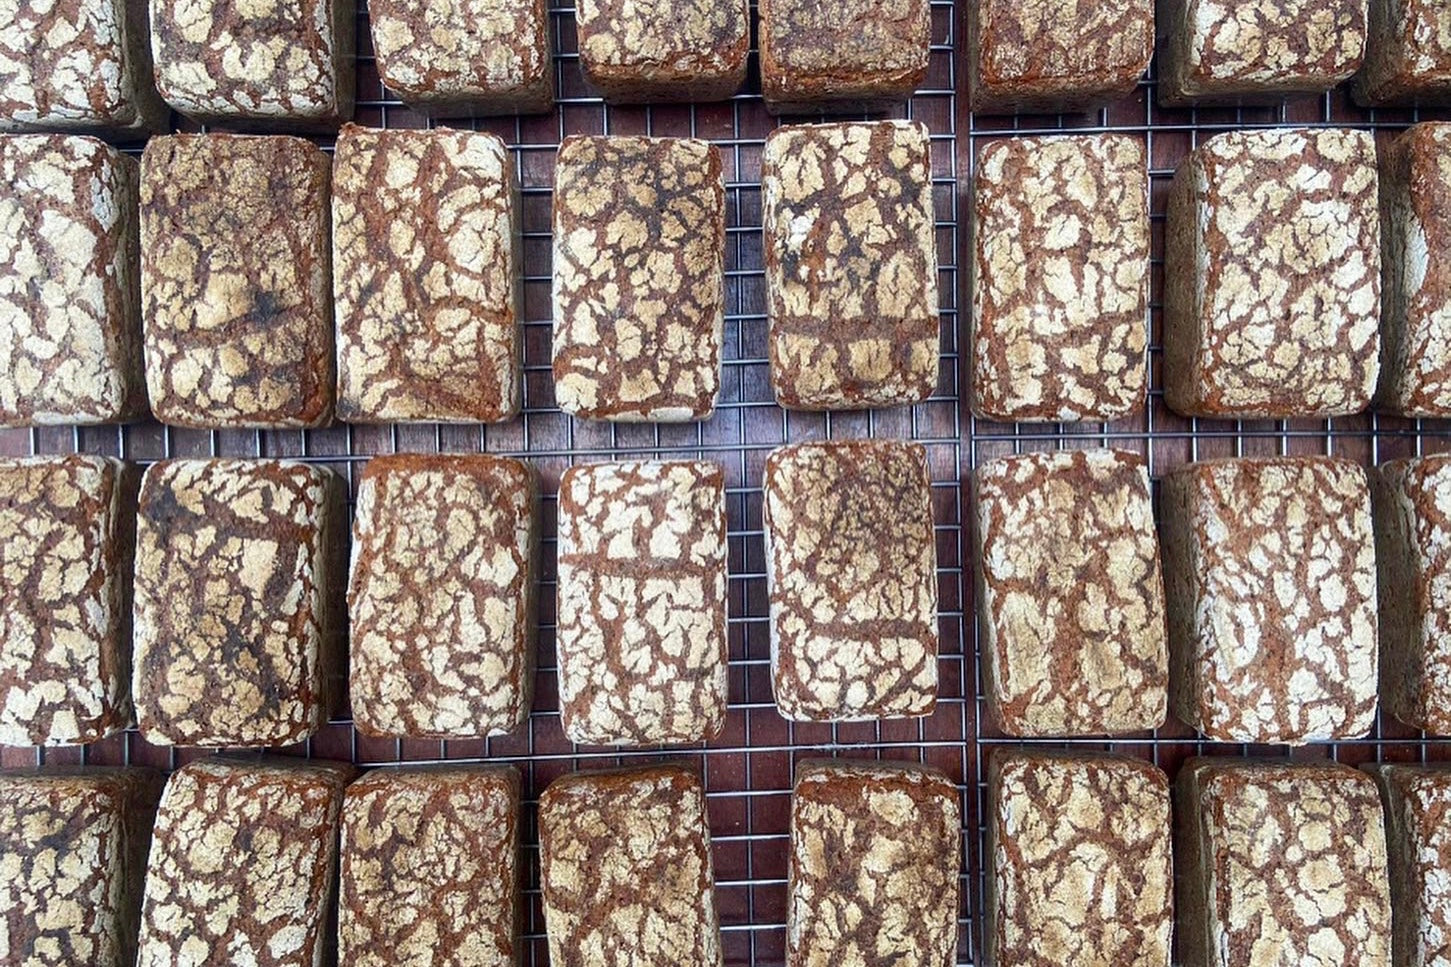 Wakelyns Rye Sourdough Tin Loaf - Hodmedod's British Pulses & Grains